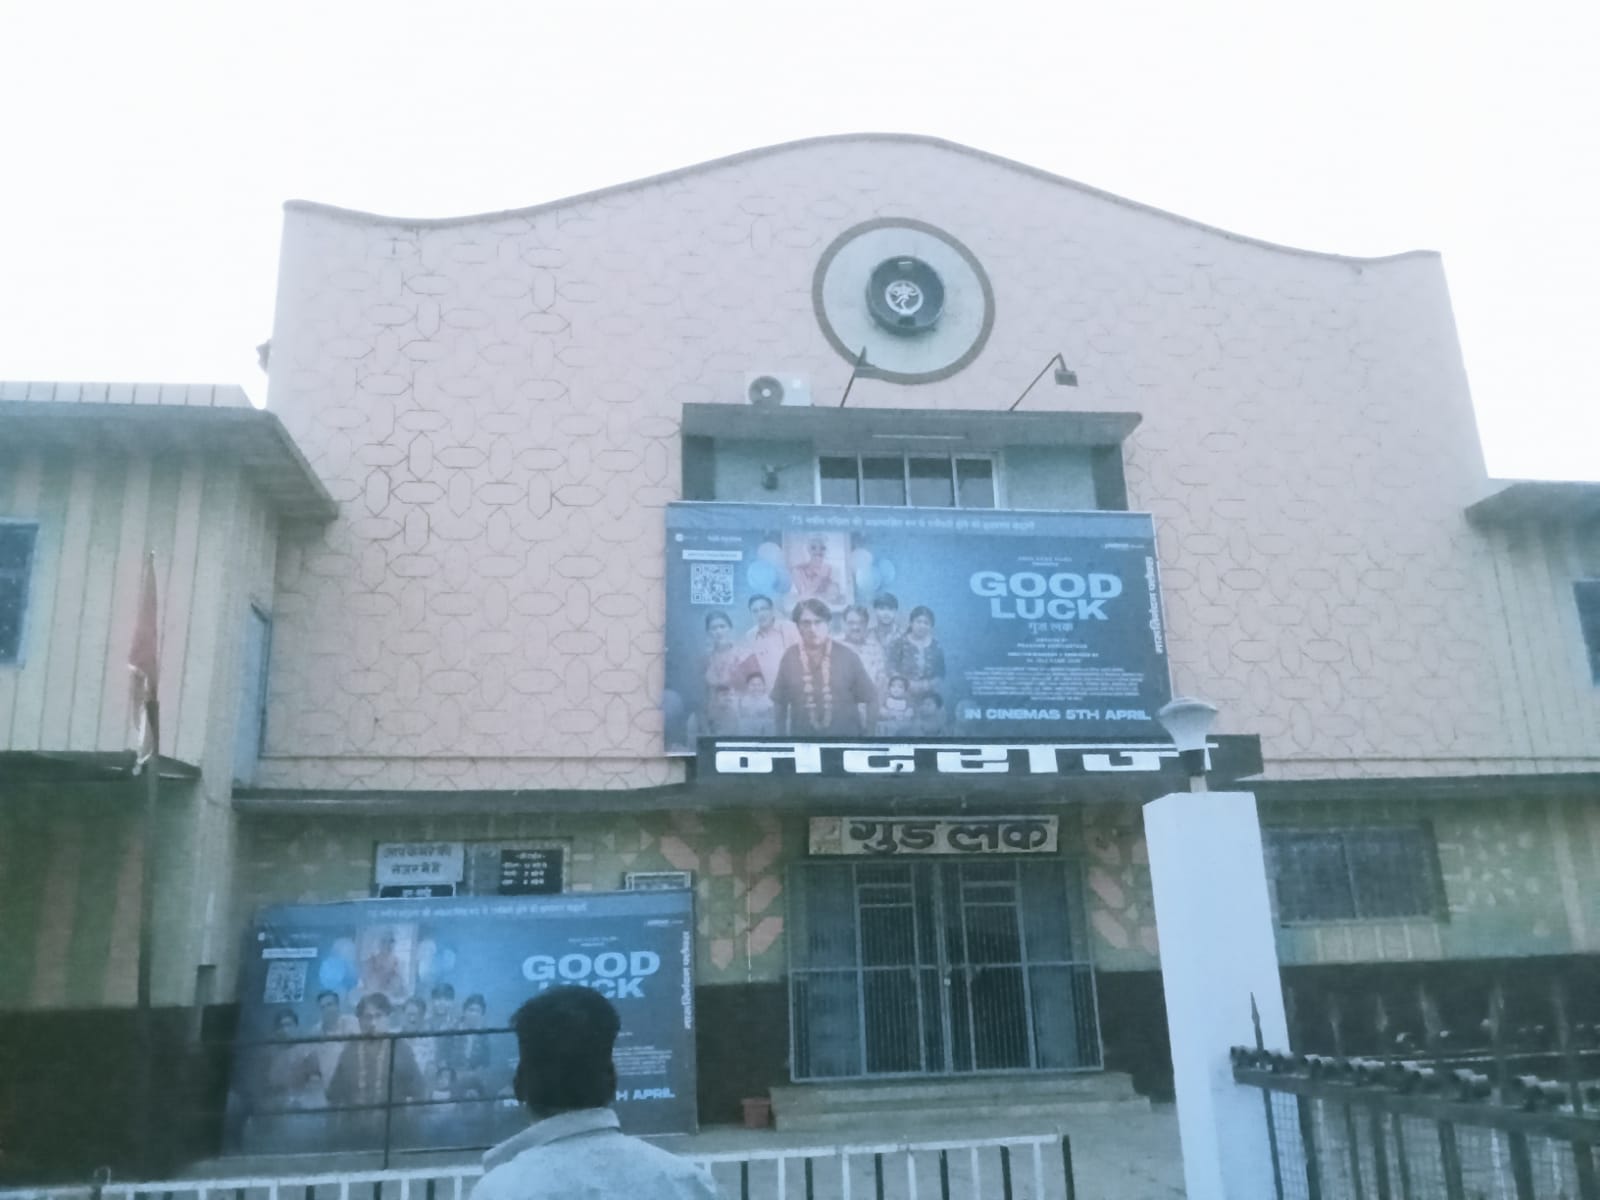 Khurai'sNatraj Talkies to Reopen for Screening of Good Luck